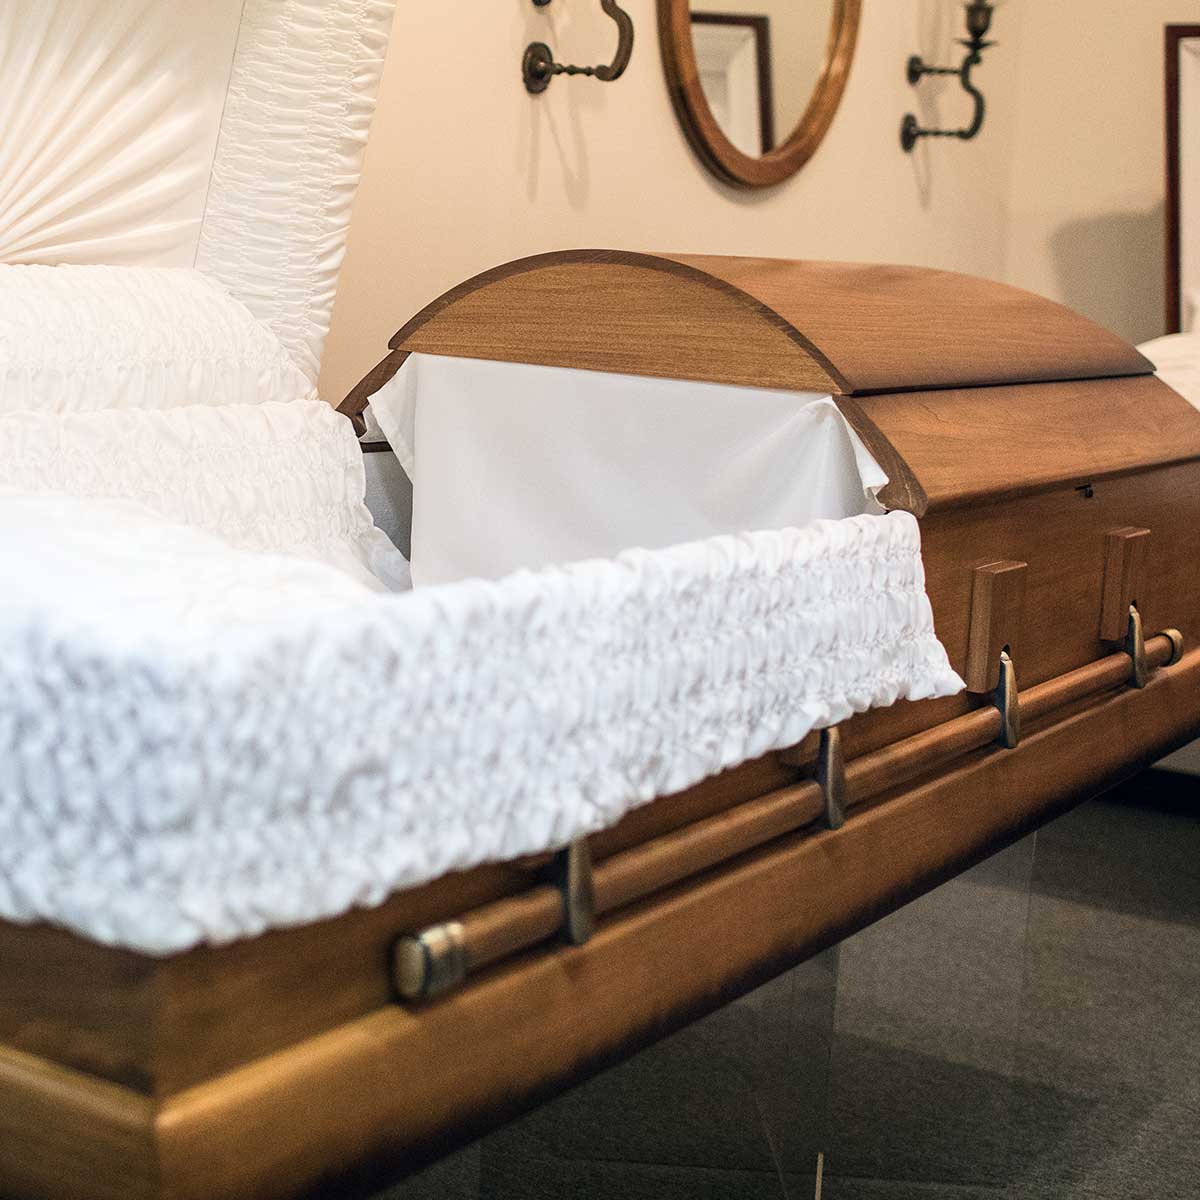 Wooden casket funeral services options